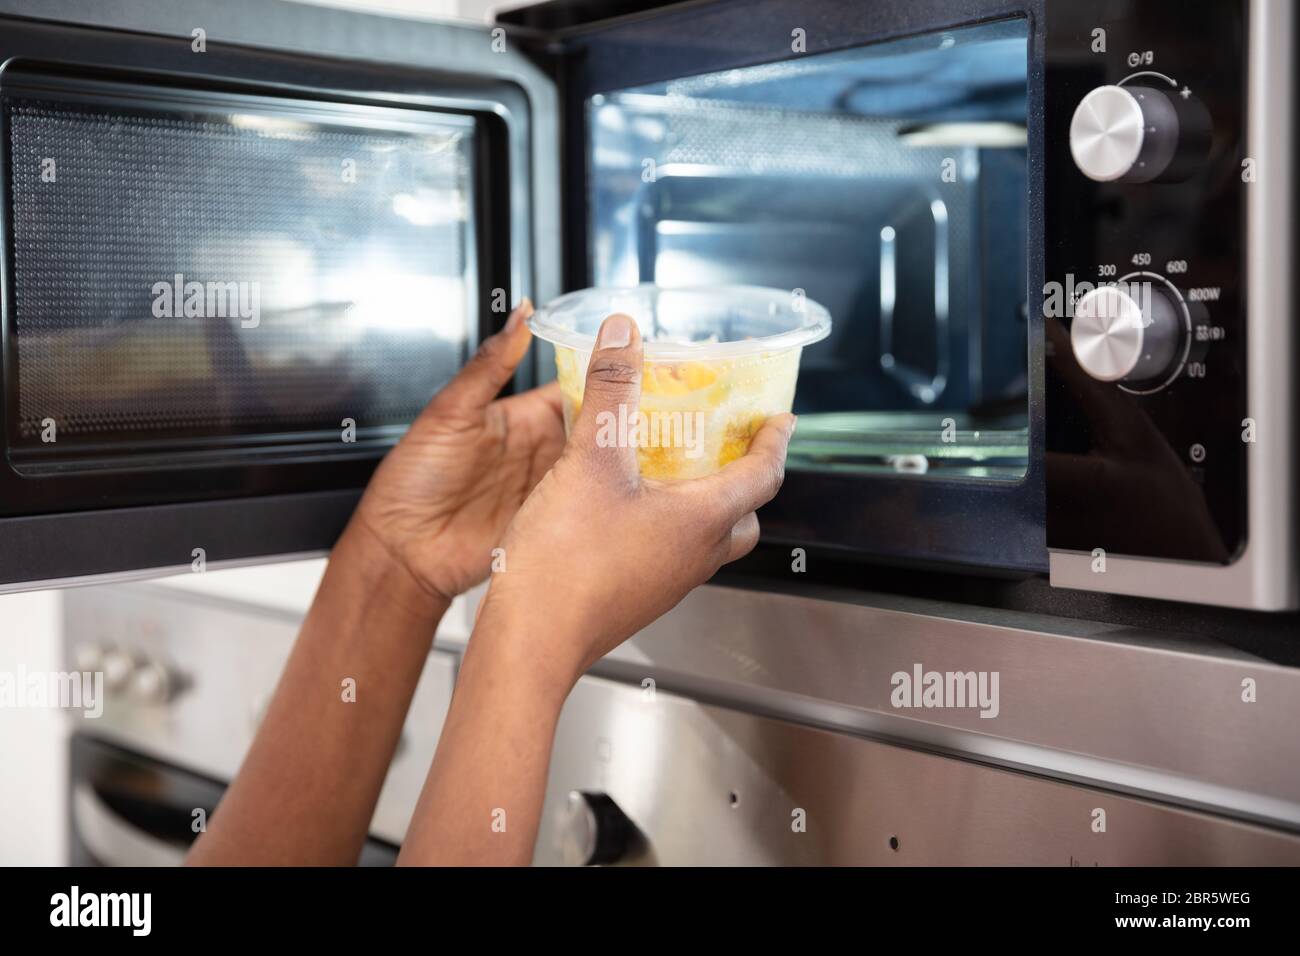 https://c8.alamy.com/comp/2BR5WEG/close-up-of-a-humans-hand-heating-food-in-microwave-oven-2BR5WEG.jpg